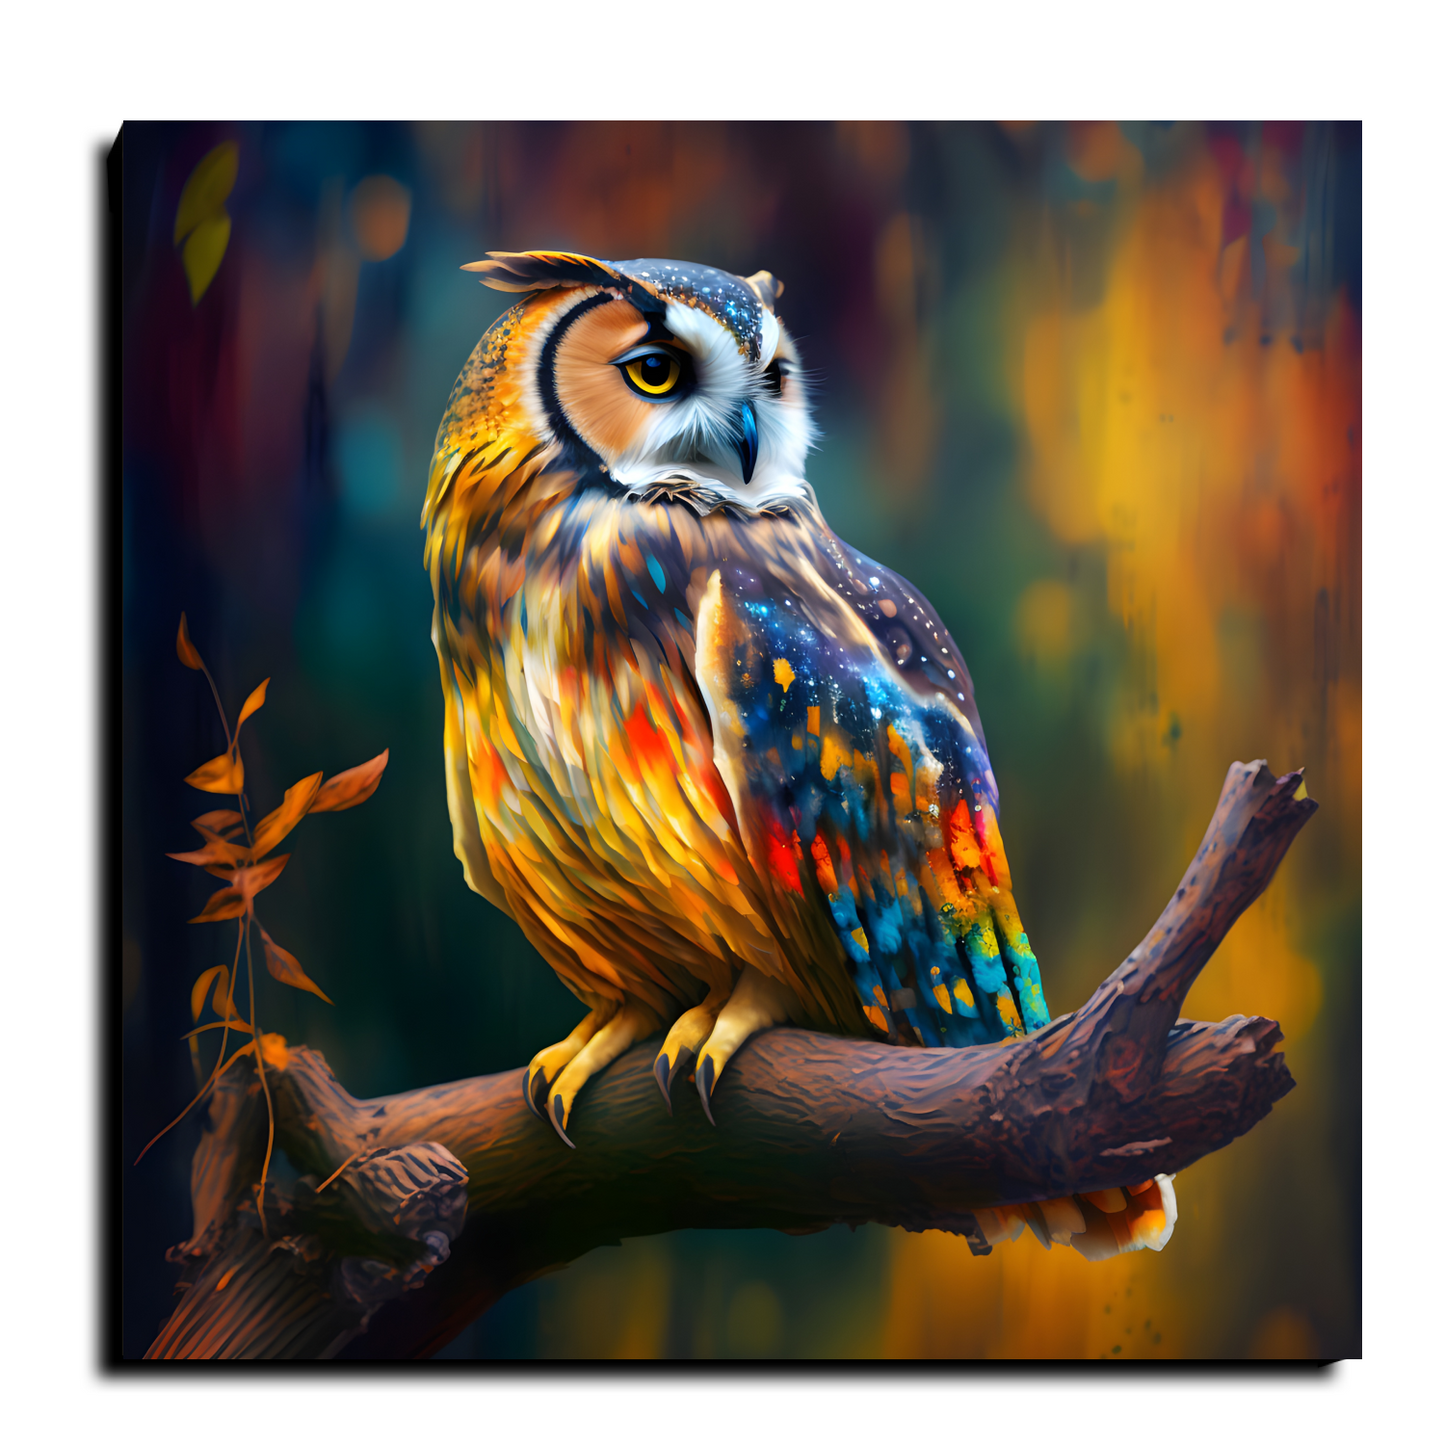 Owl Sitting on Branch Wood Print Wall Art